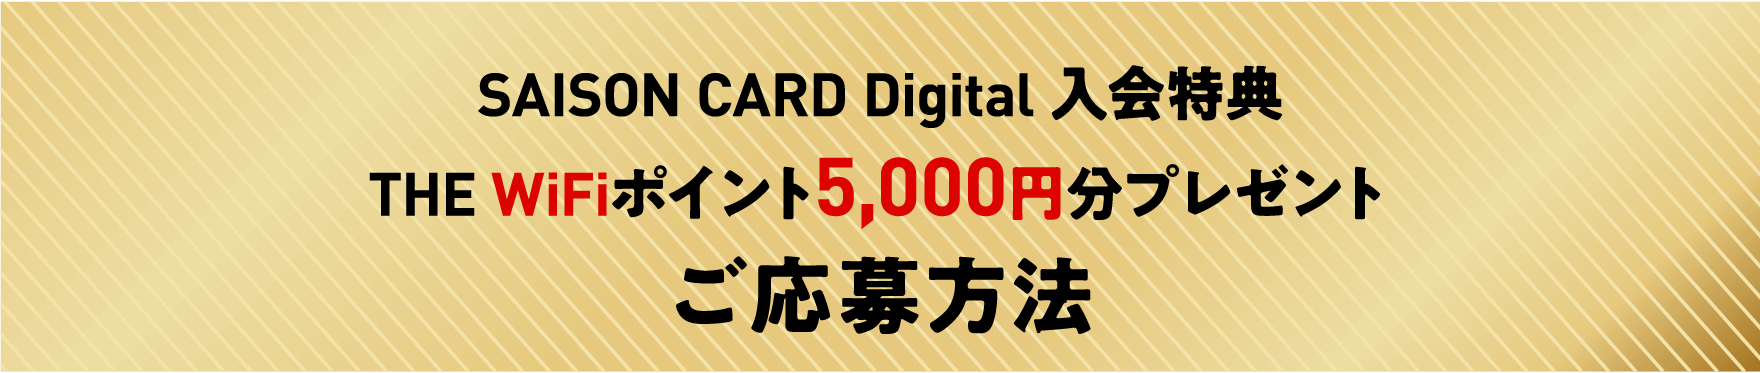 【SAISON CARD Digital入会特典】THE WiFiポイント 5,000円分プレゼント ご応募方法